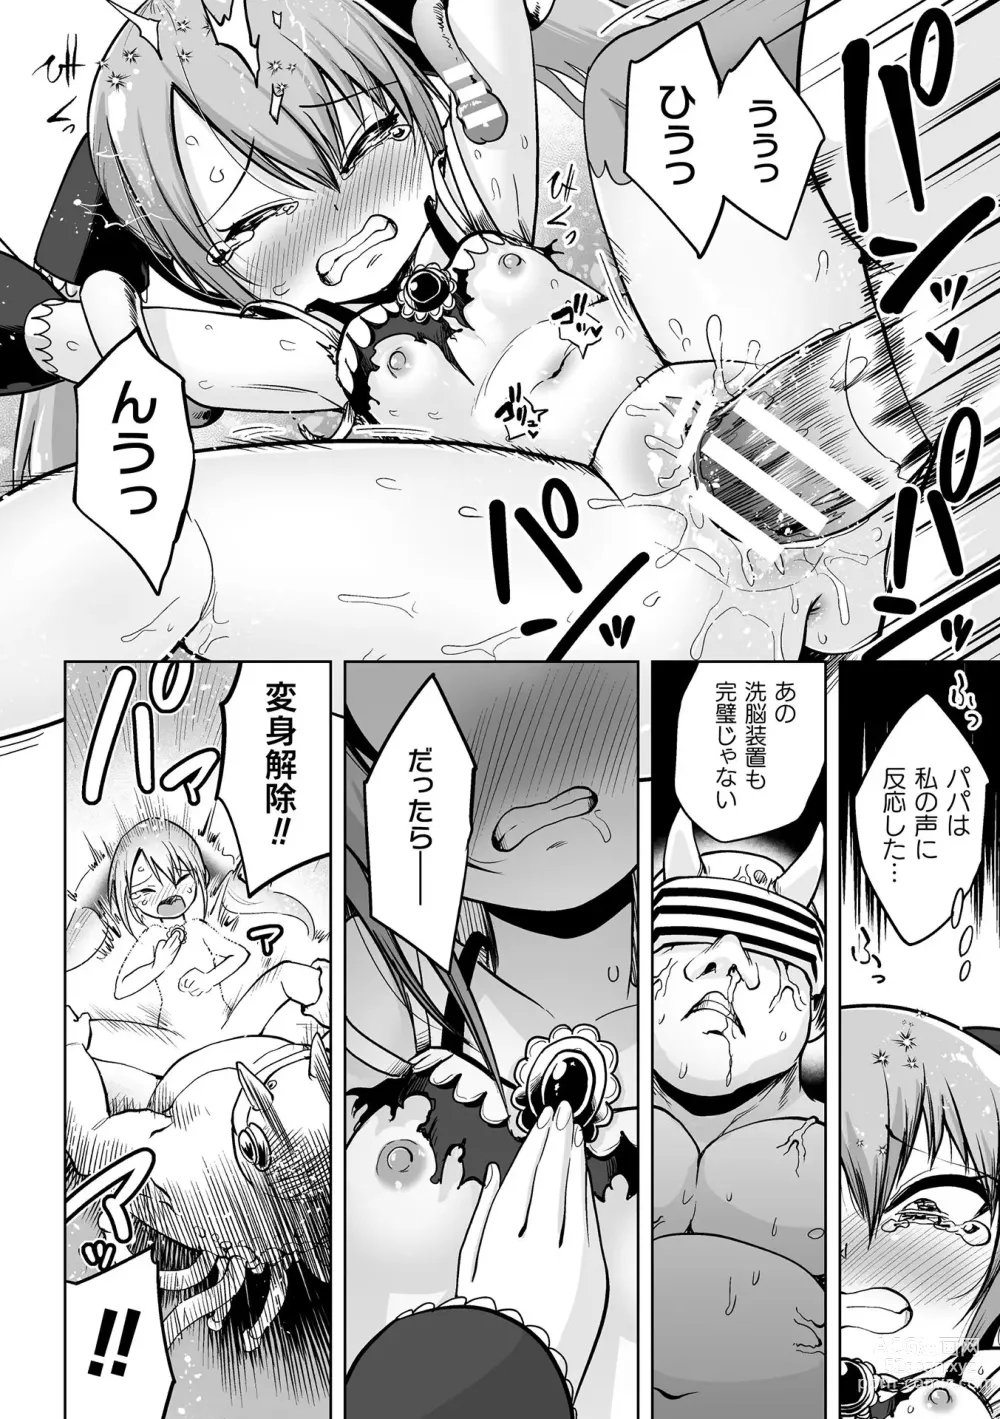 Page 164 of manga Kukkoro Heroines Vol. 34